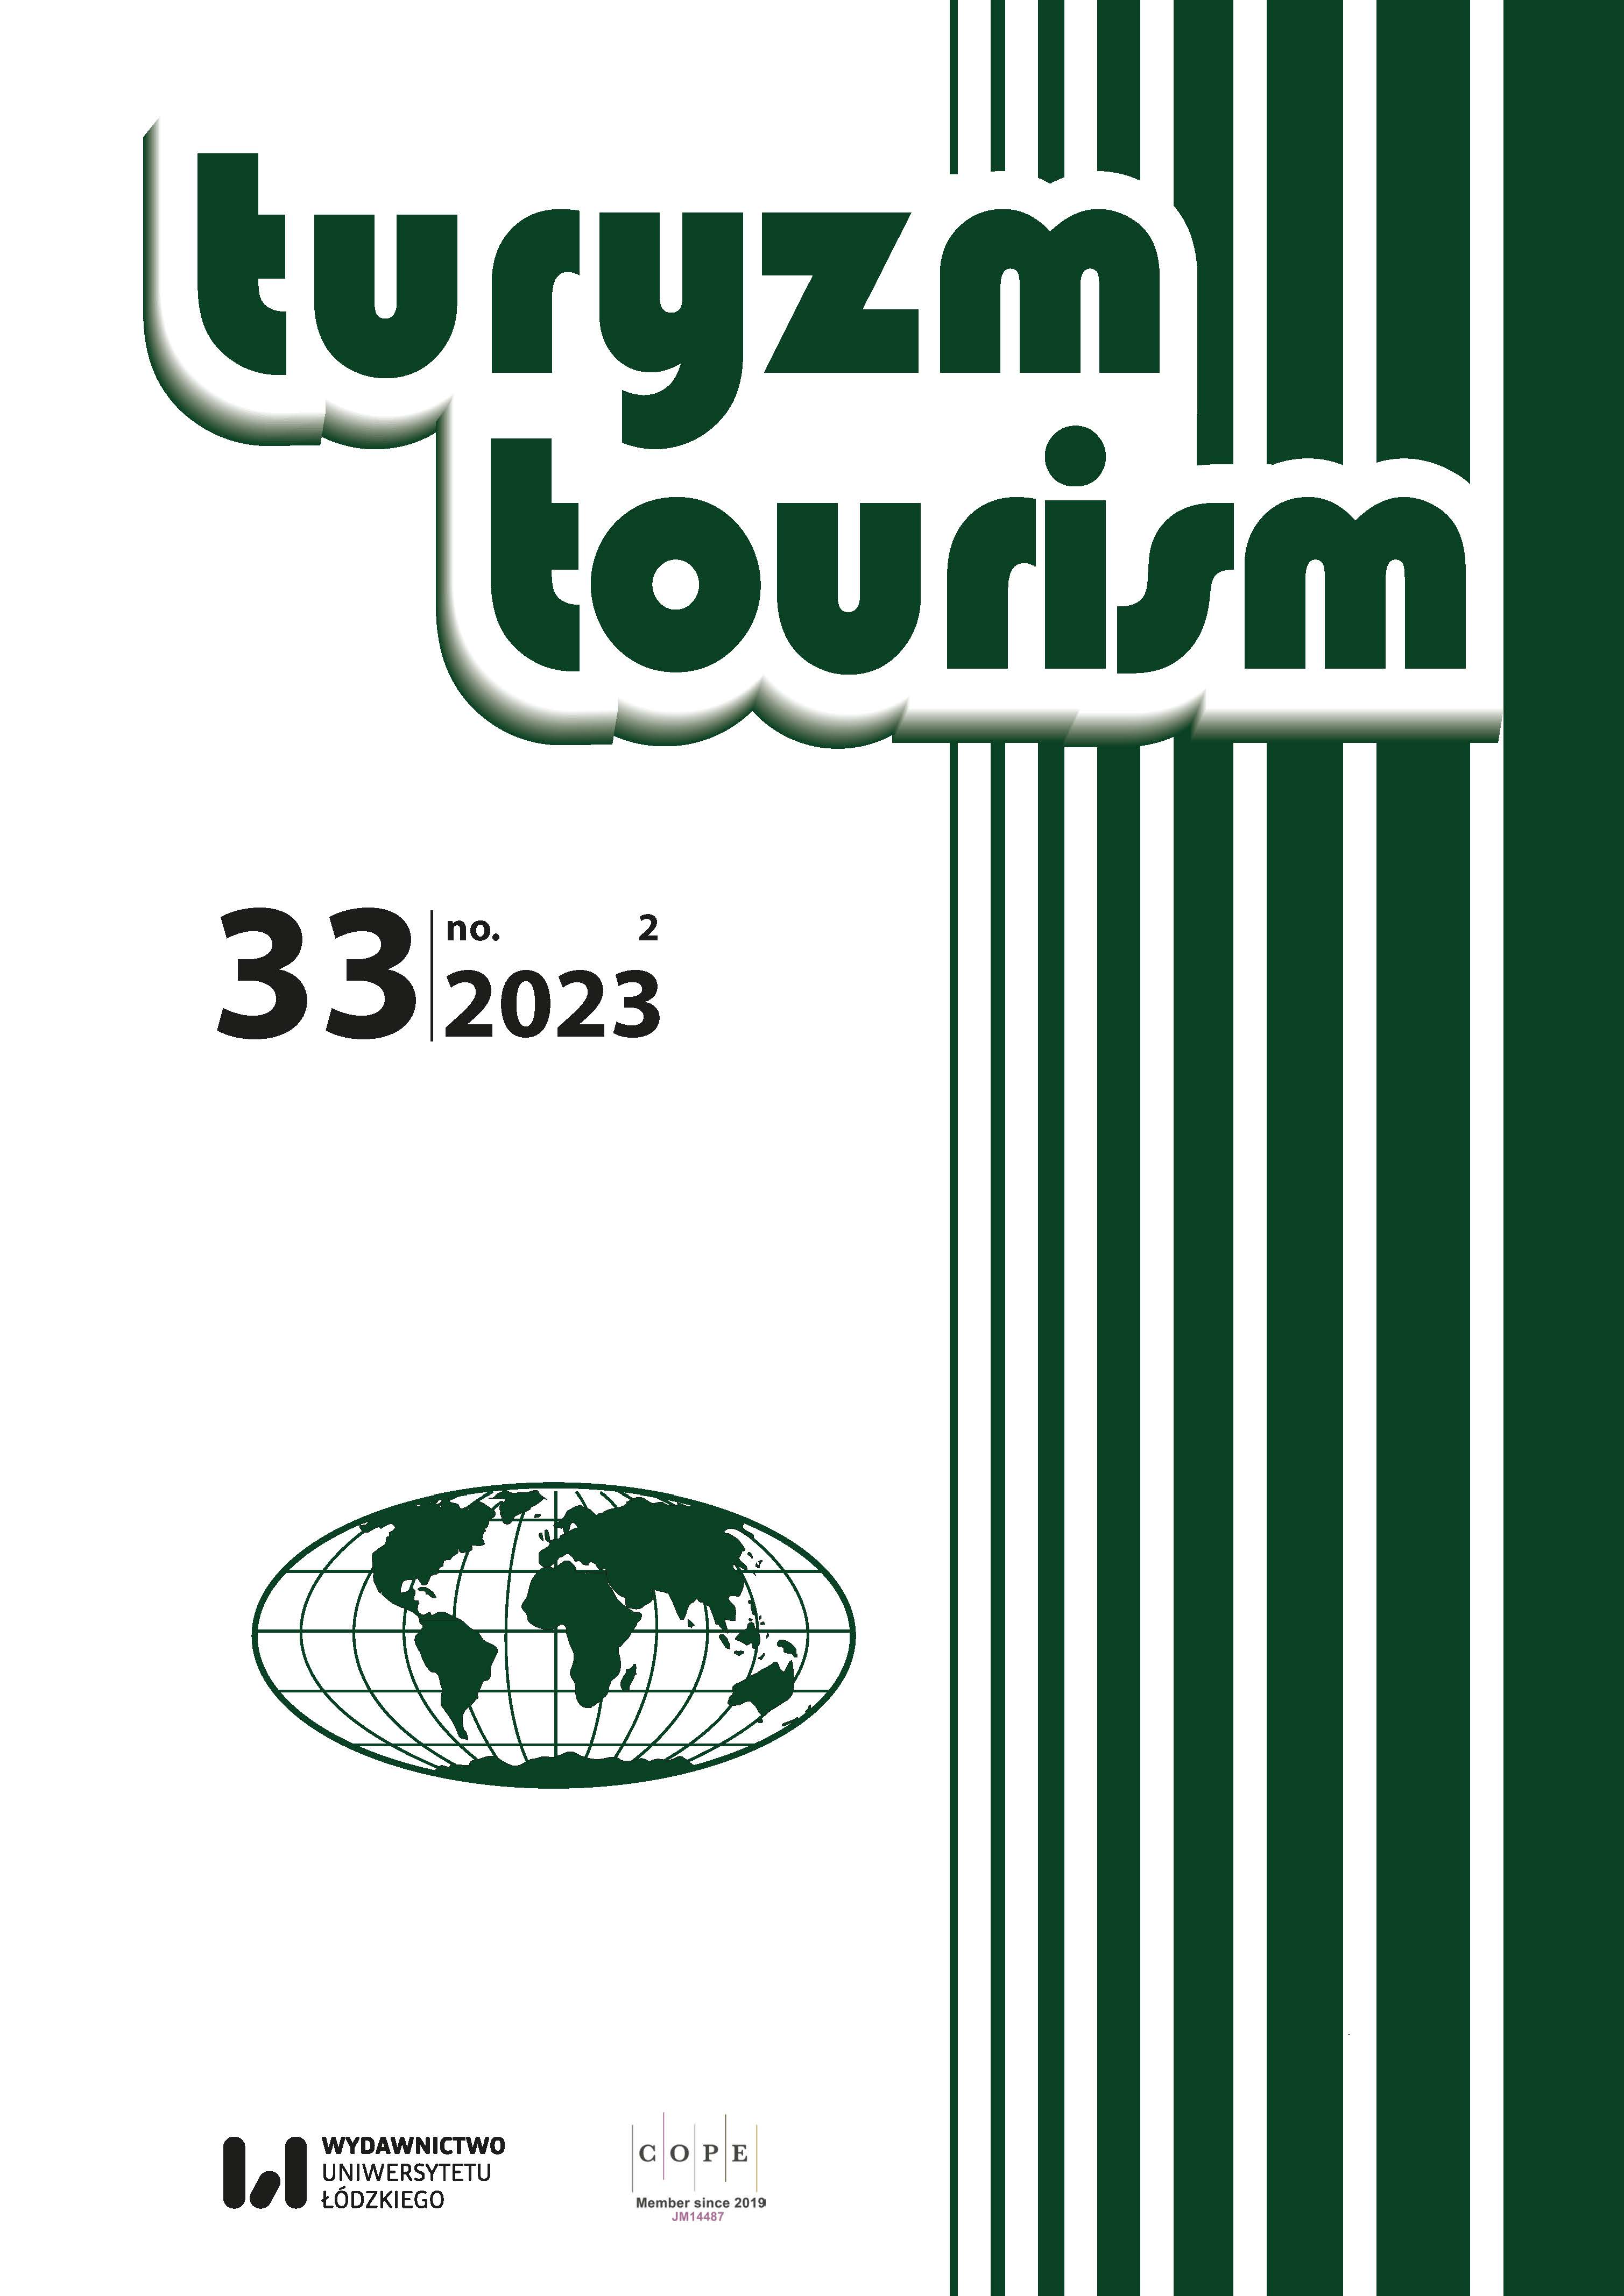 Ecotourism research progress: A bibliometric analysis (period 2002–2022) using VOSviewer Software